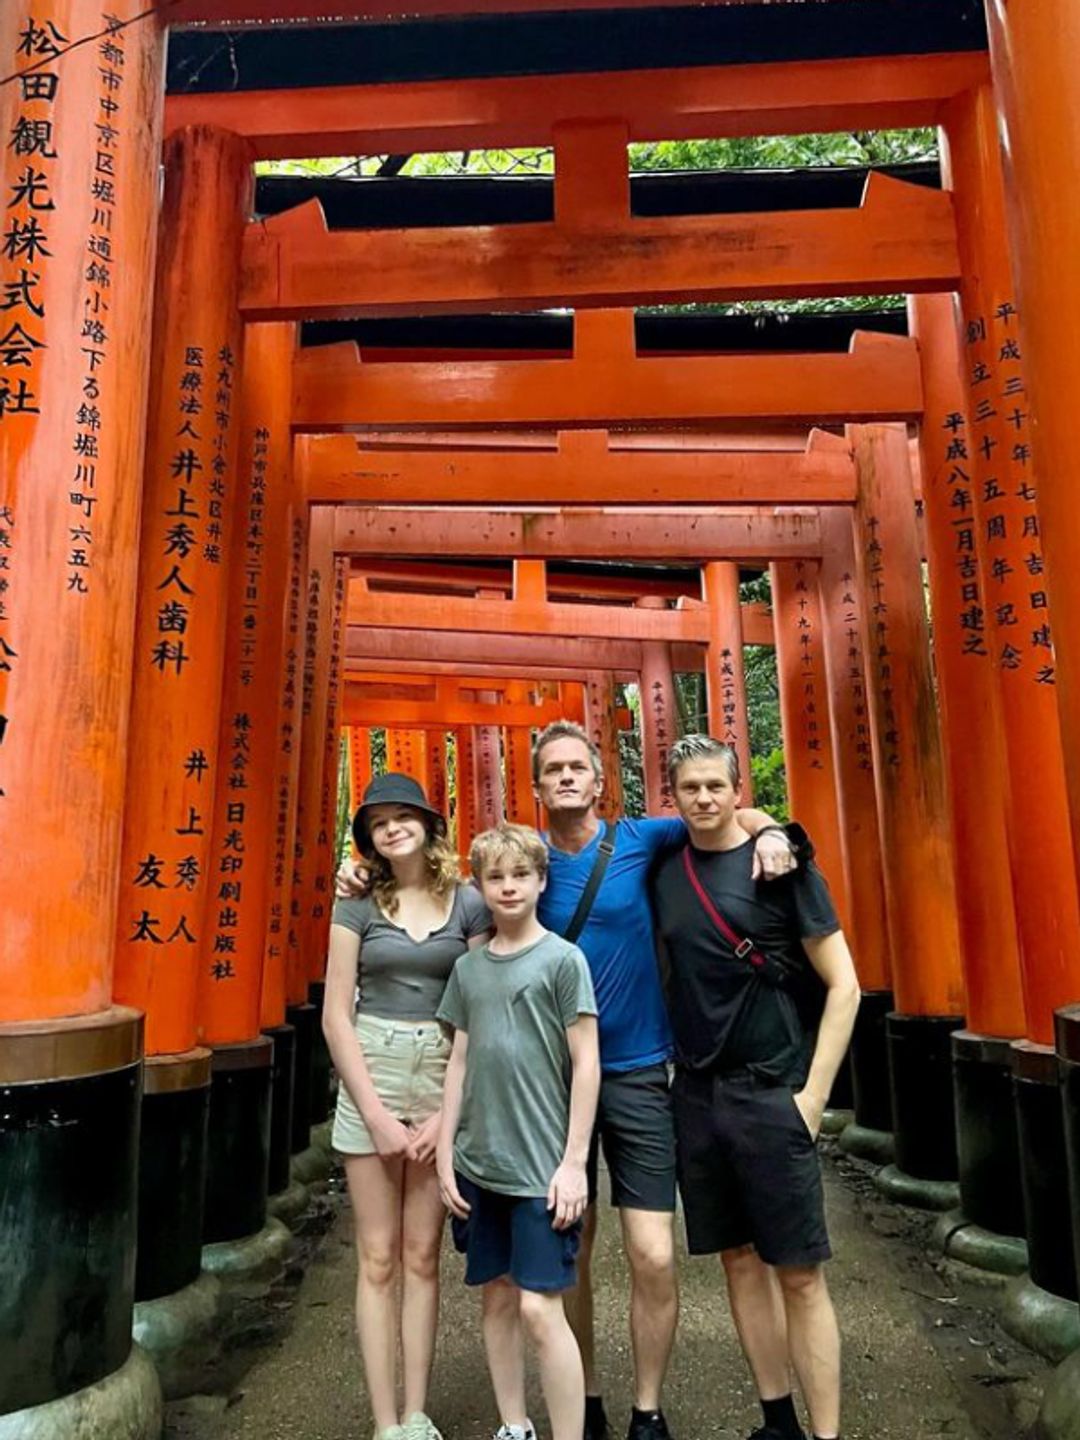 Neil Patrick Harris, David Burtka and their twins underneath Japanese arches